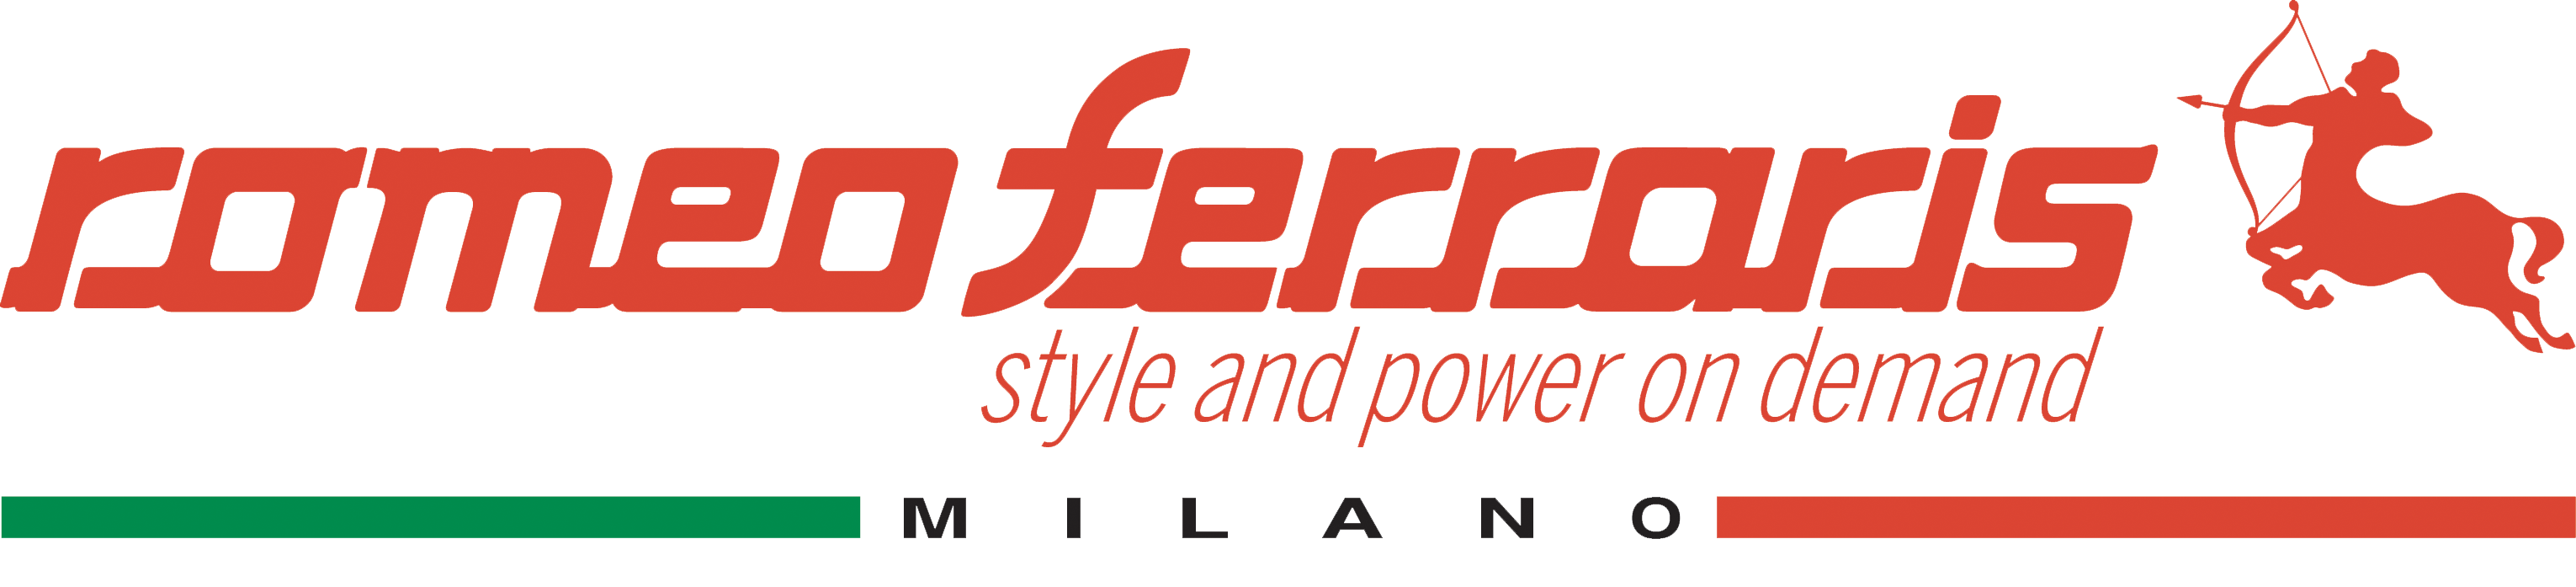 logo Romeo Ferraris img